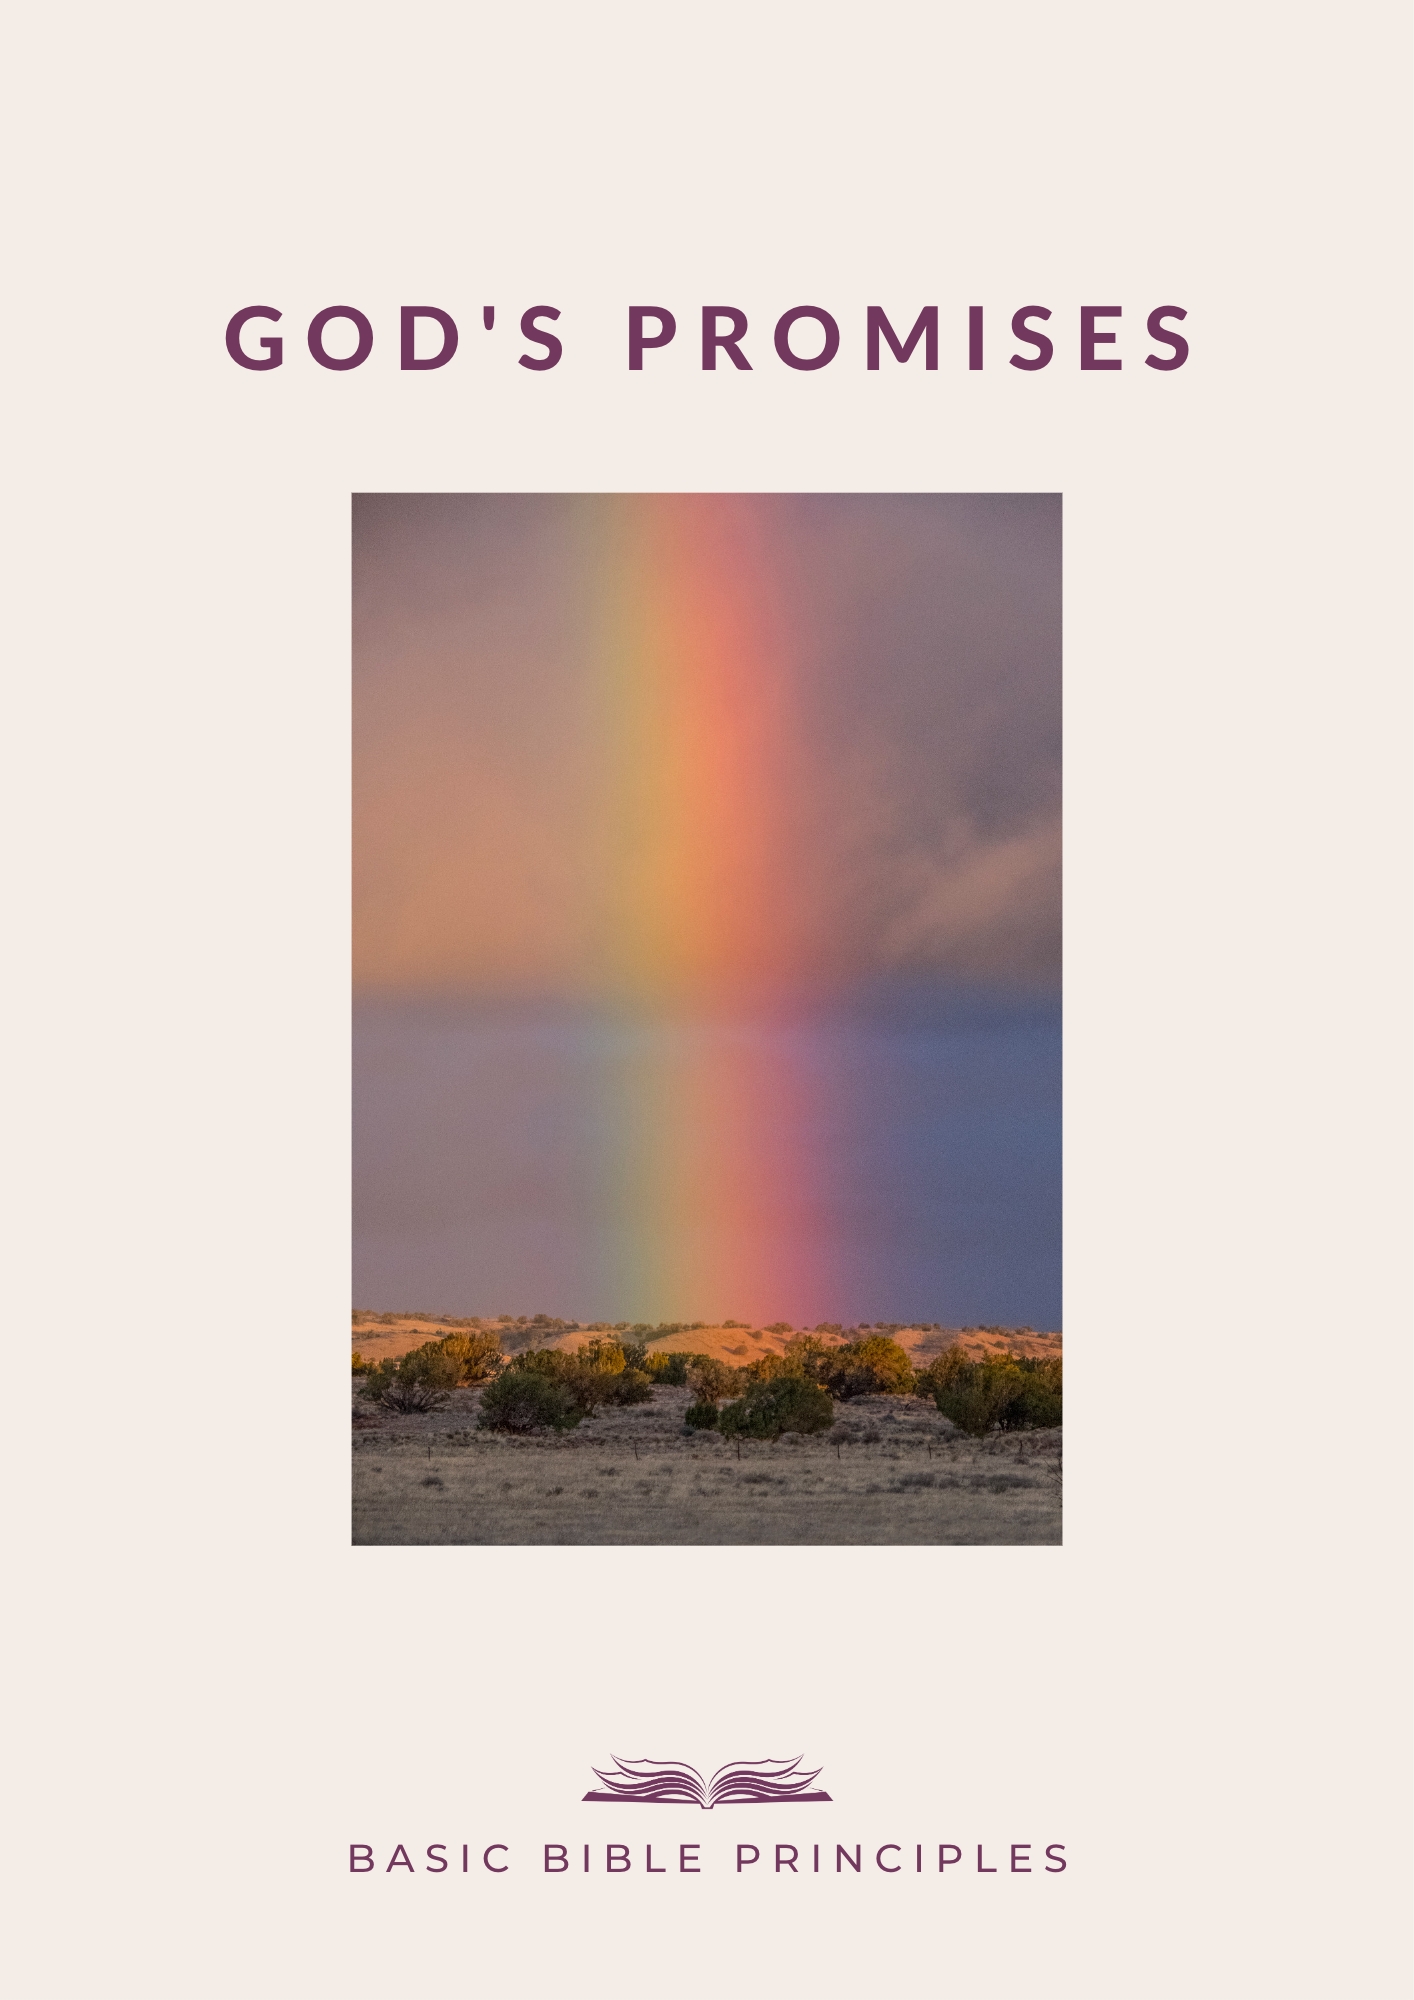 Basic Bible Principles: GOD’S PROMISES